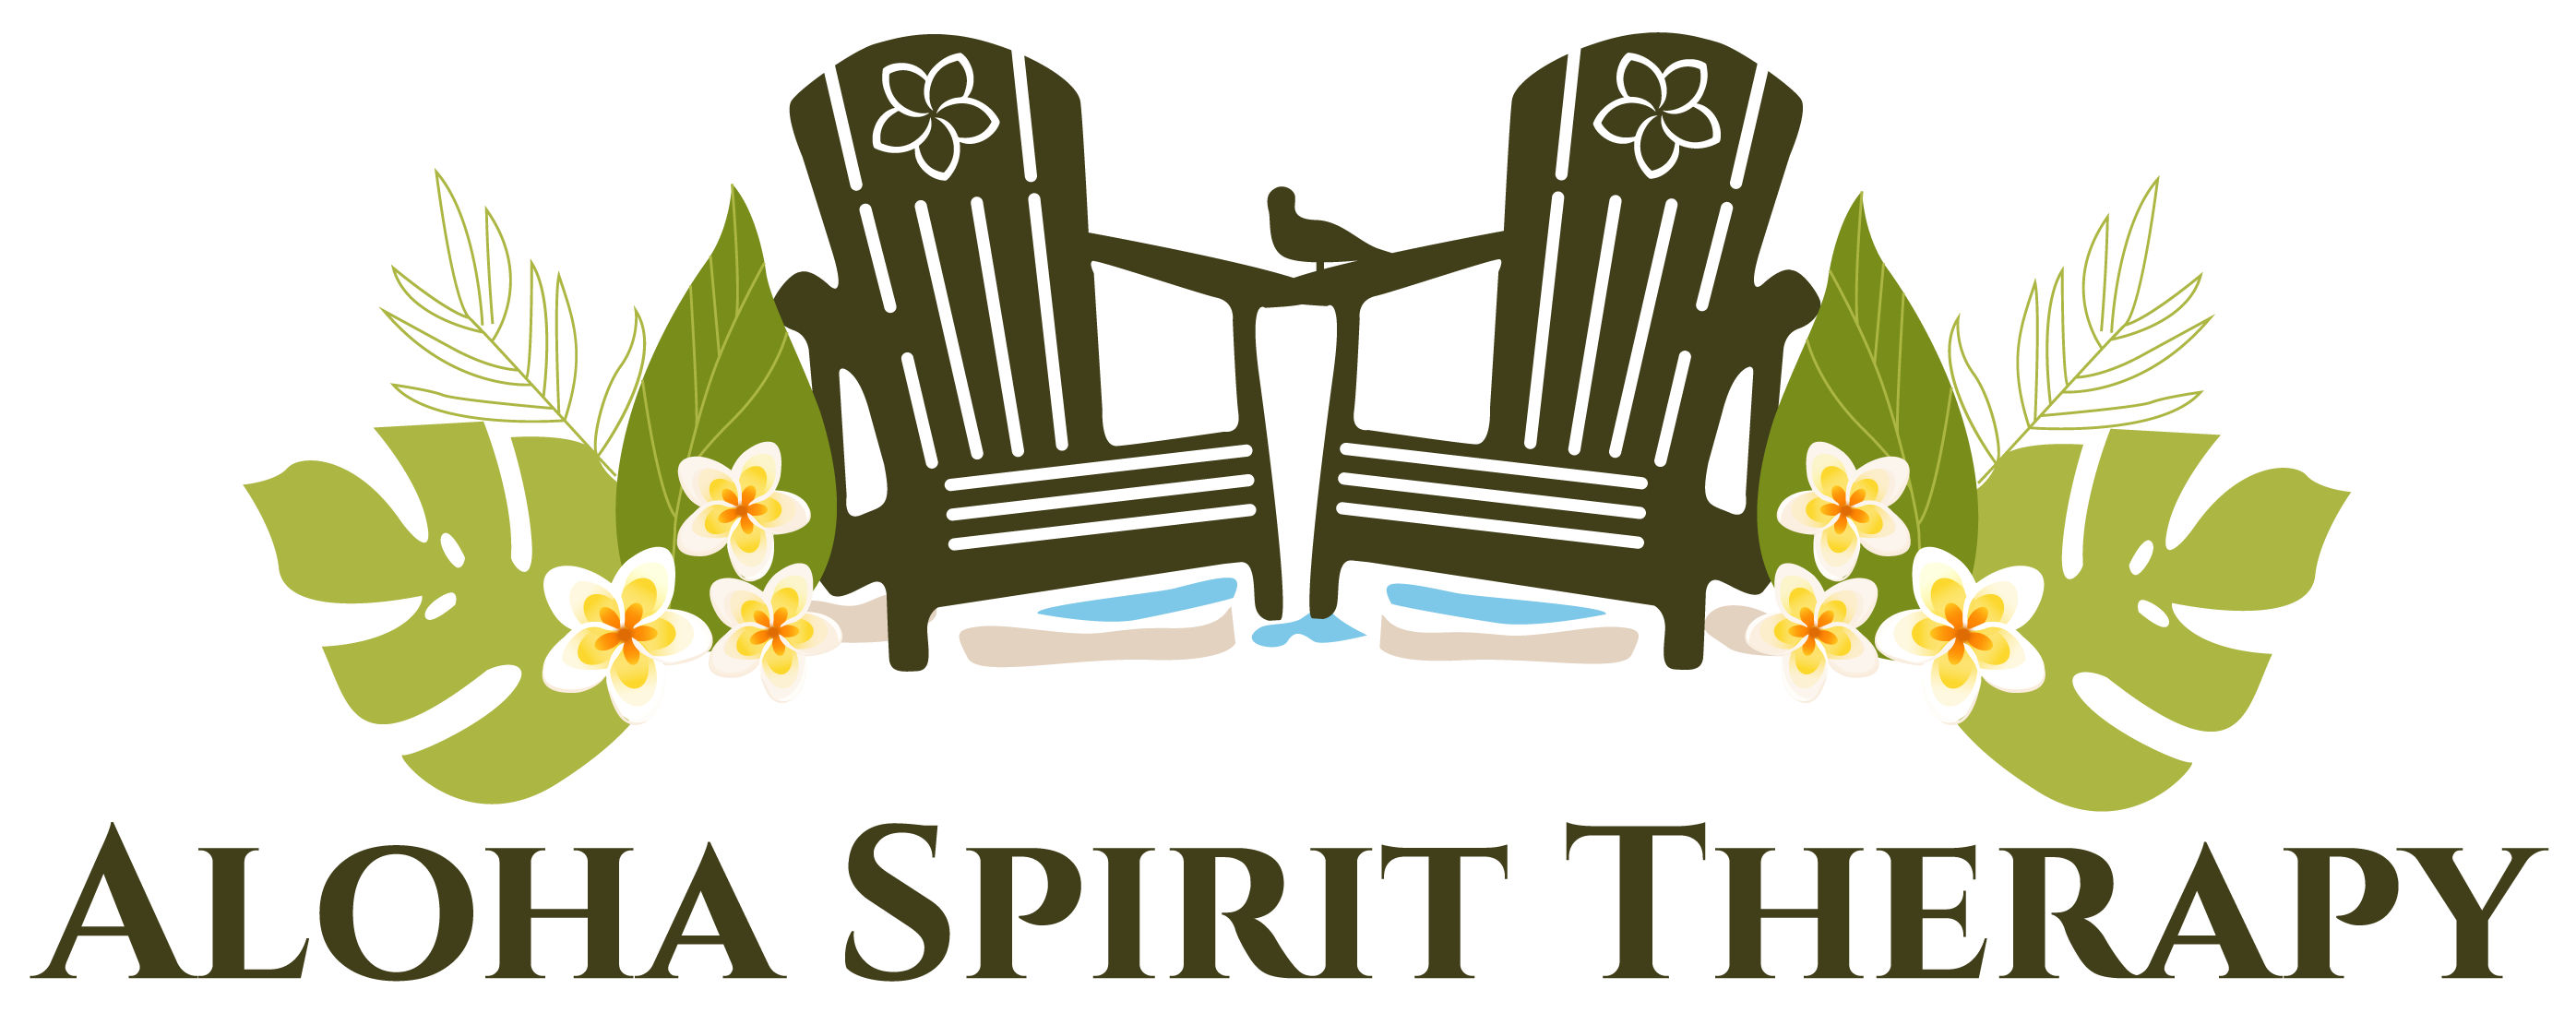 Aloha Spirit Therapy 